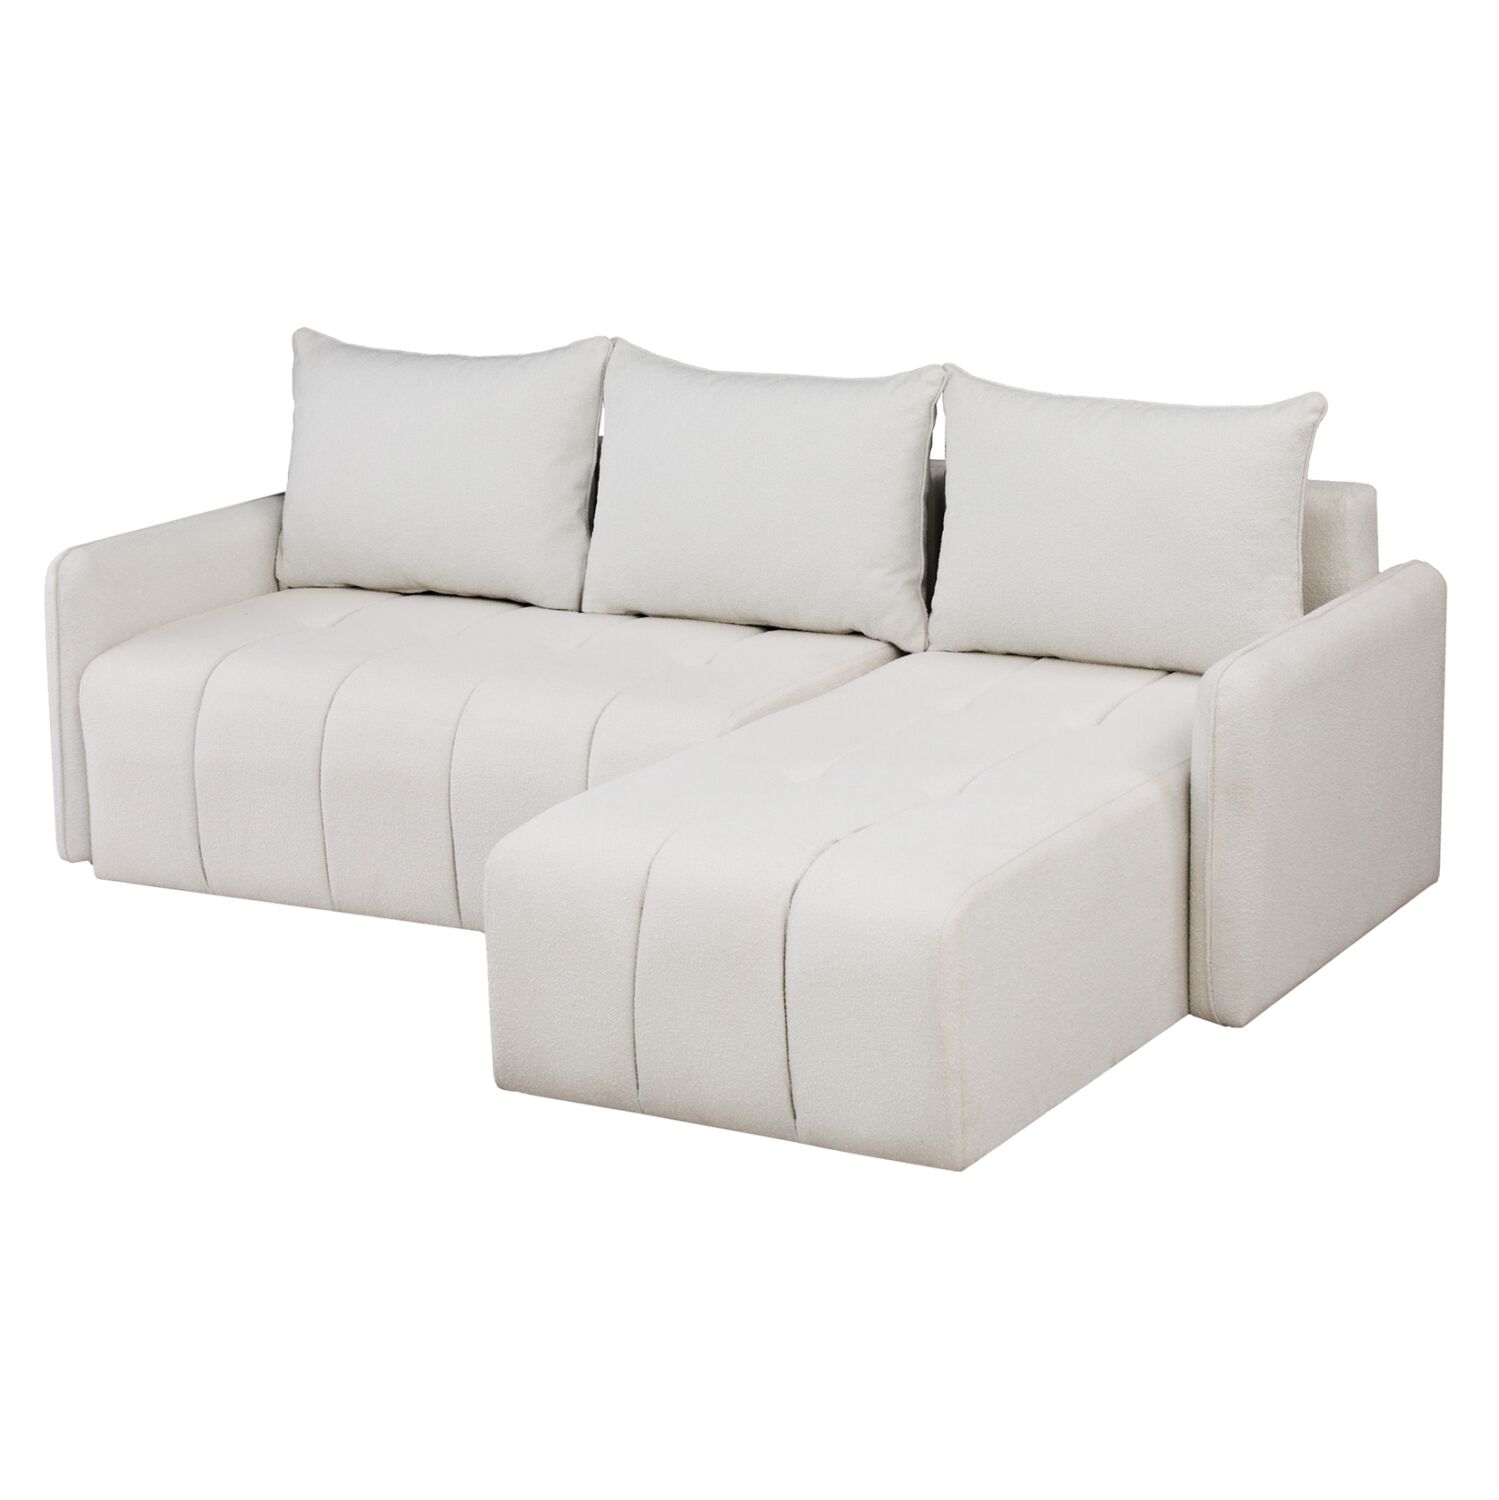 CORNER SOFA-BED PROTON HM3272.01 WHITE BOUCLE FABRIC 225x94x70Hcm.